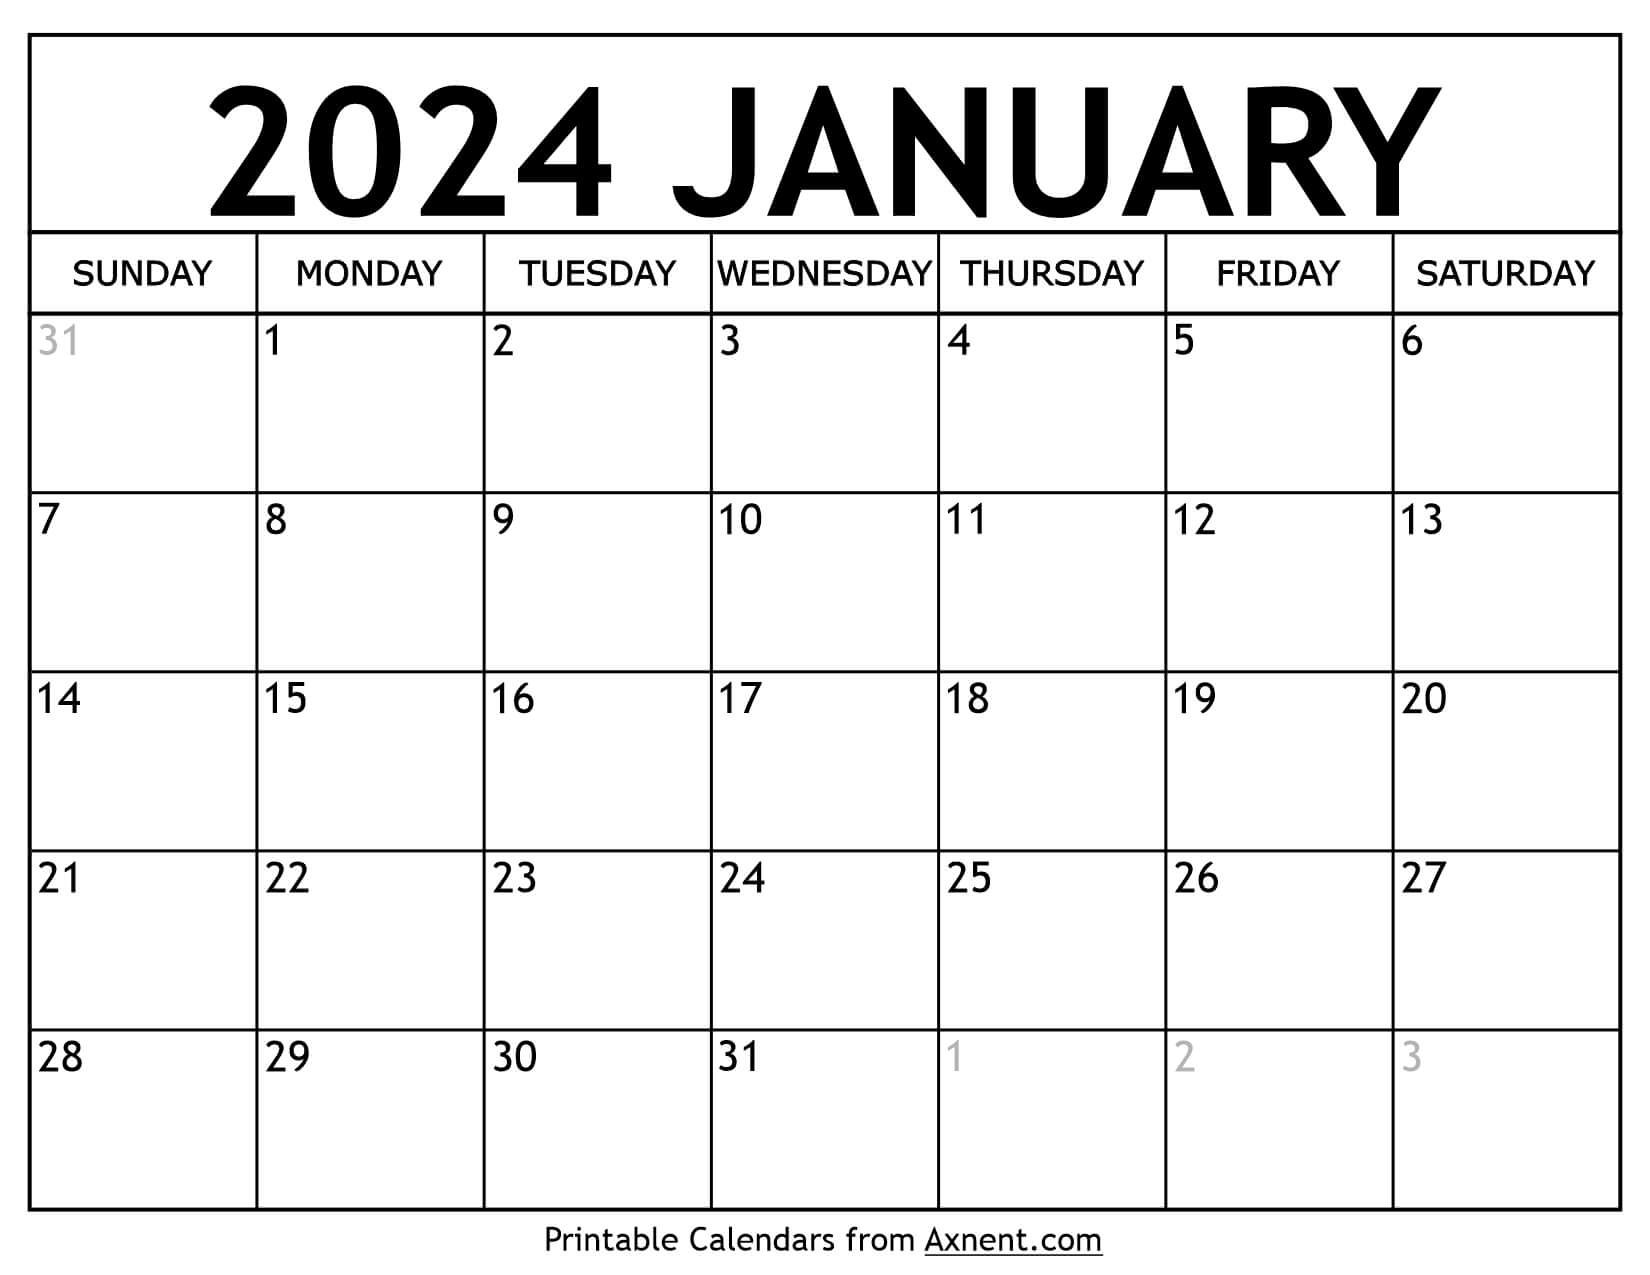 Printable January 2024 Calendar Template - Print Now for Jan 2024 Calendar Printable Free